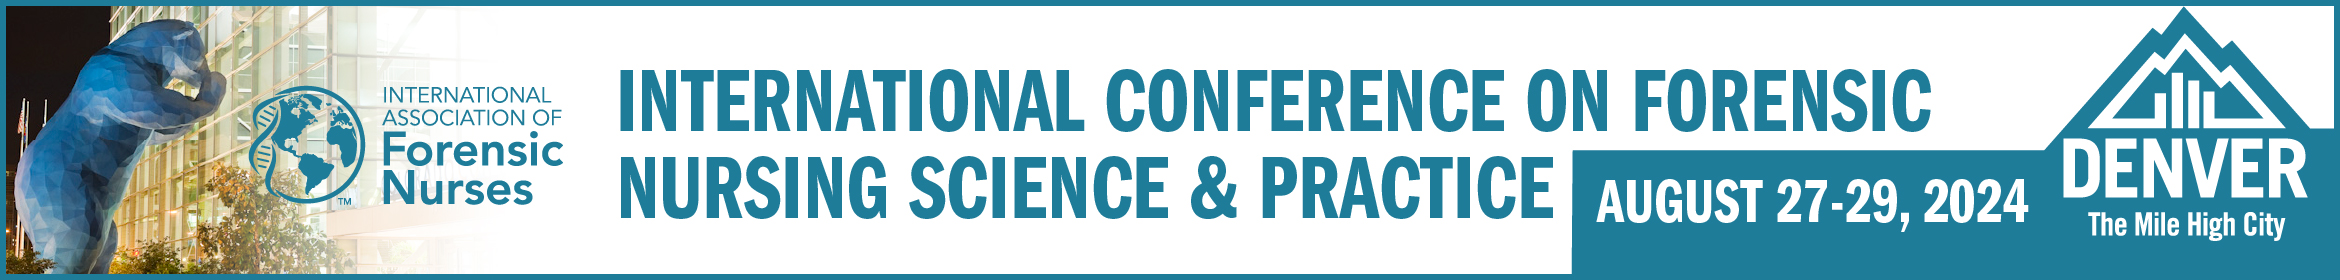 IAFN2024 International Conference Main banner